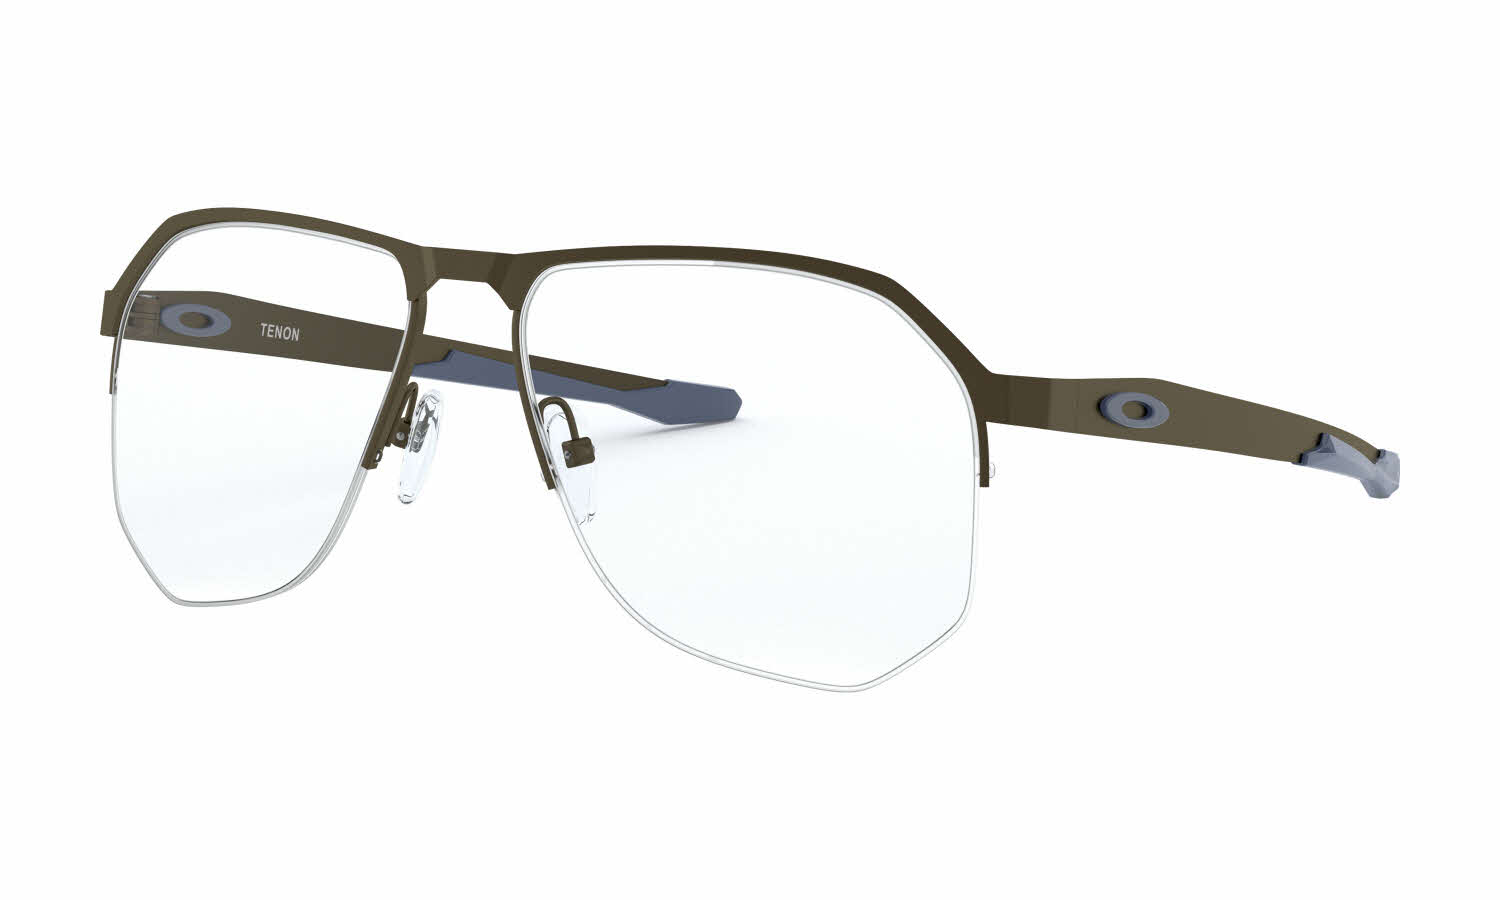 Oakley Tenon Eyeglasses